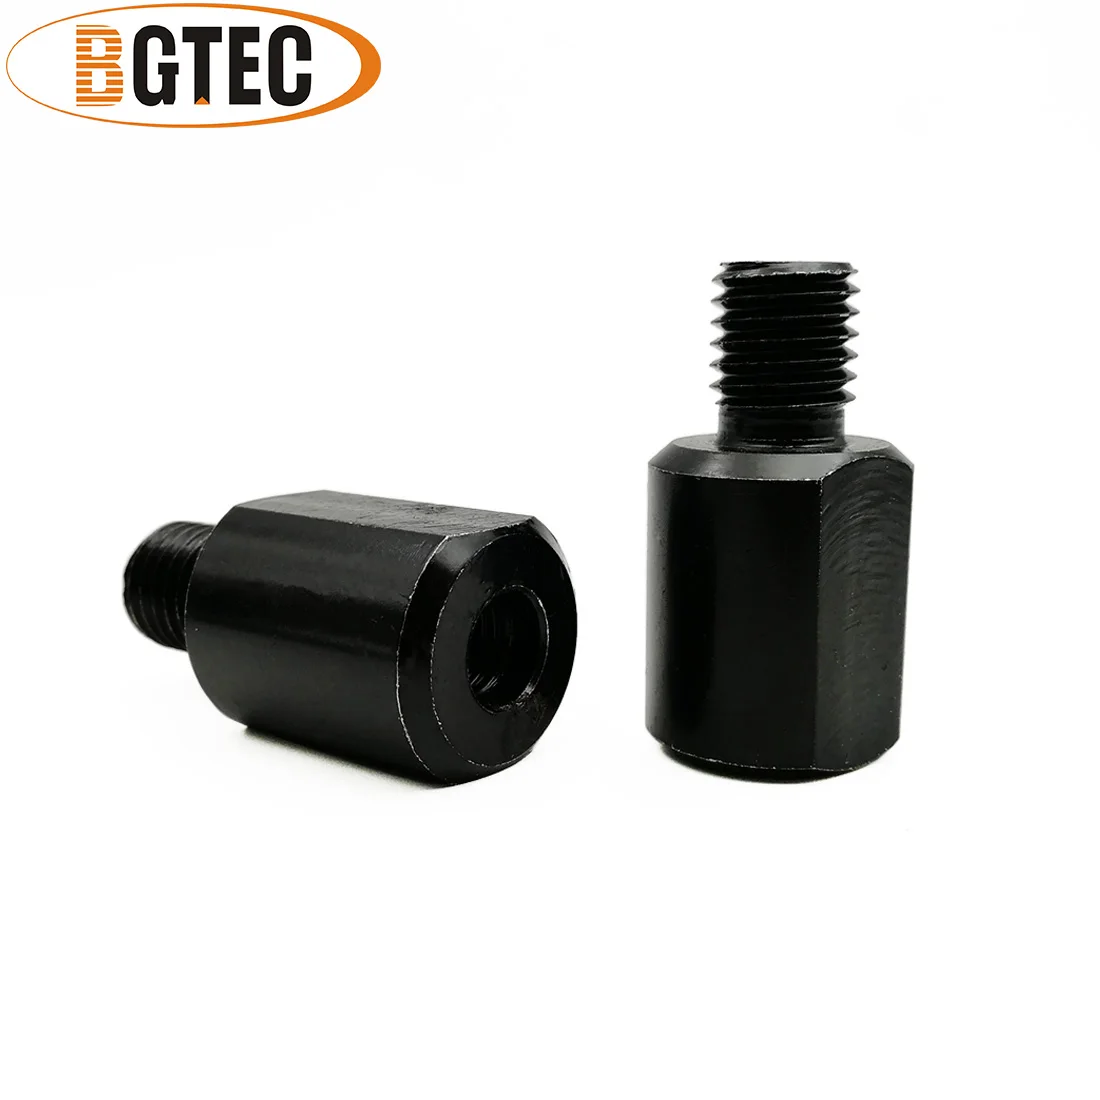 

BGTEC 2pcs Different Thread Diamond core bits adapter M14 to M10 Grinding wheel Connection Converter